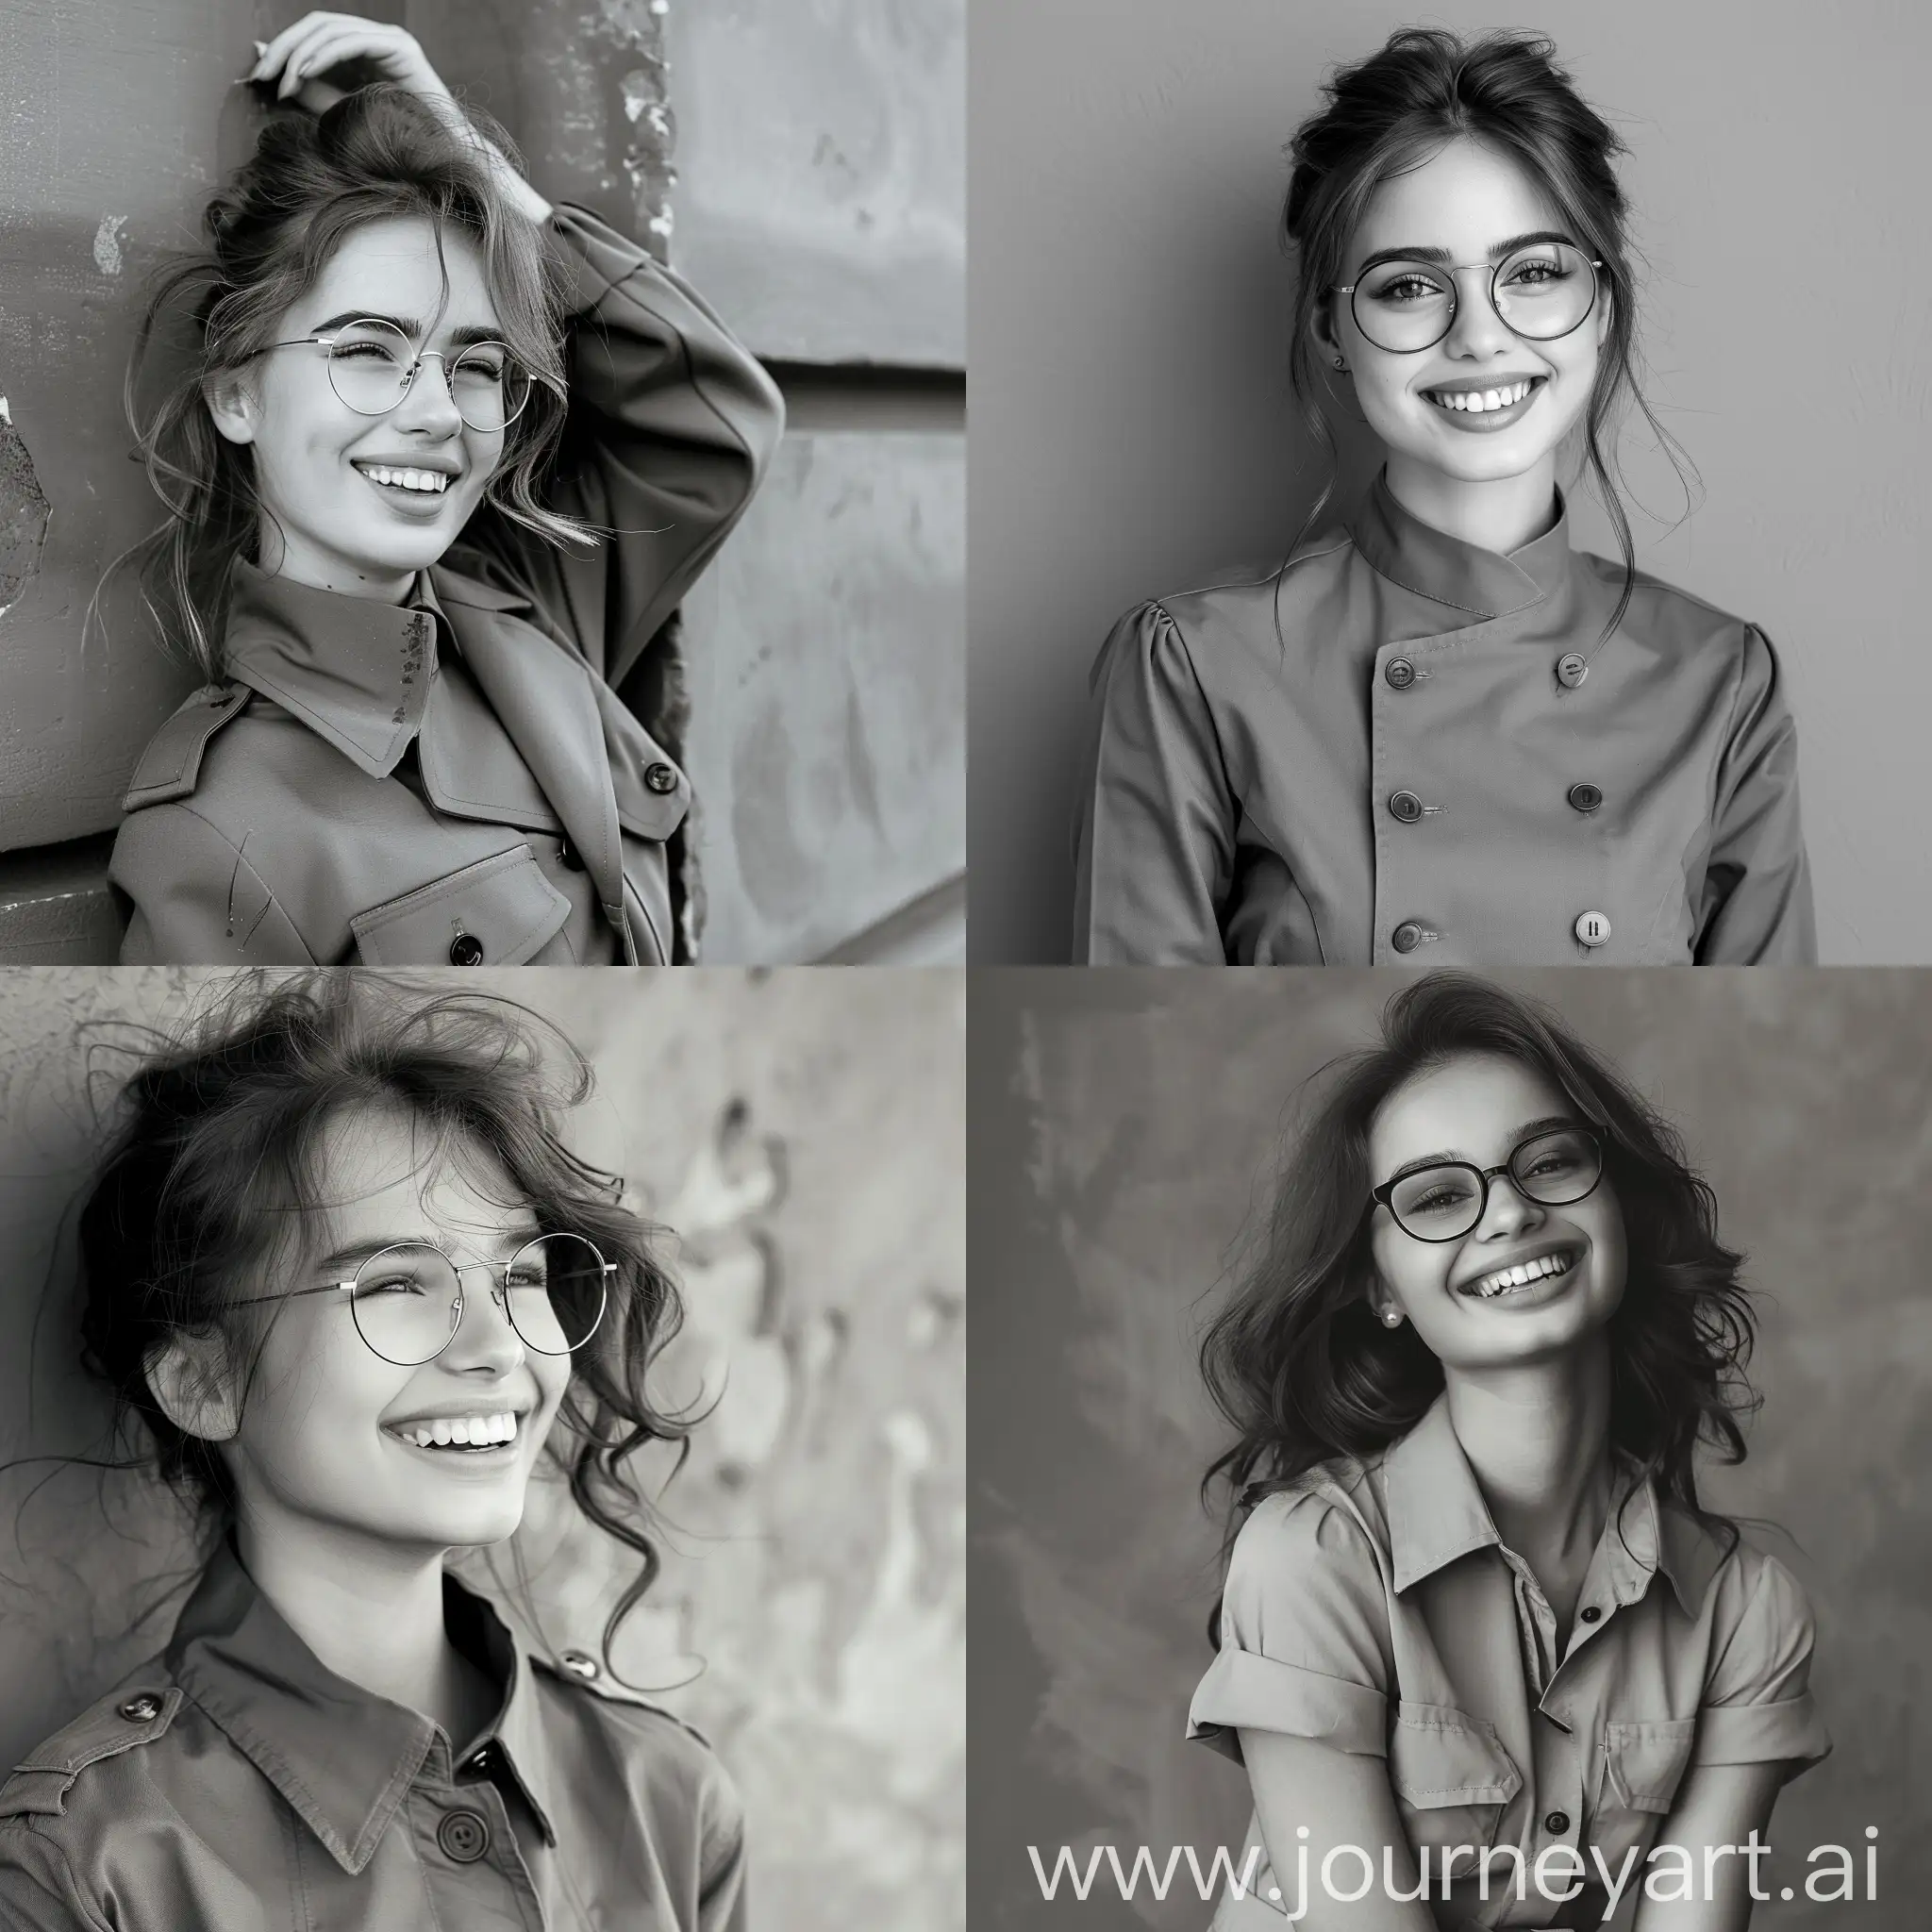 Joyful-Young-Woman-Wearing-Glasses-in-Stylish-Black-and-White-Magazine-Photoshoot